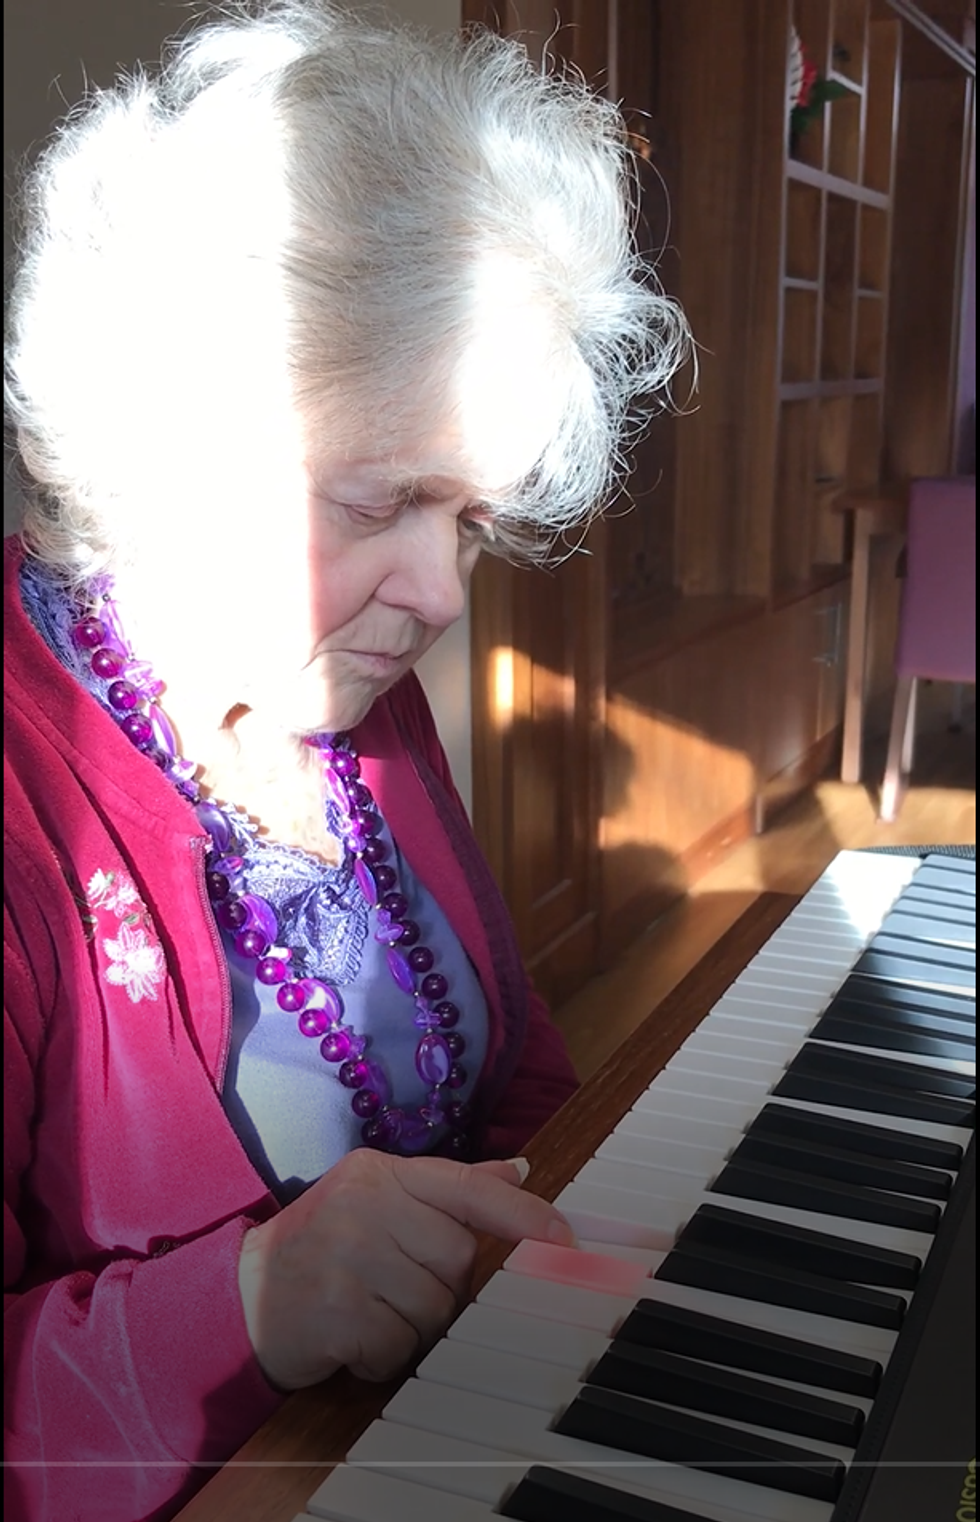 Woman playing the keyboard